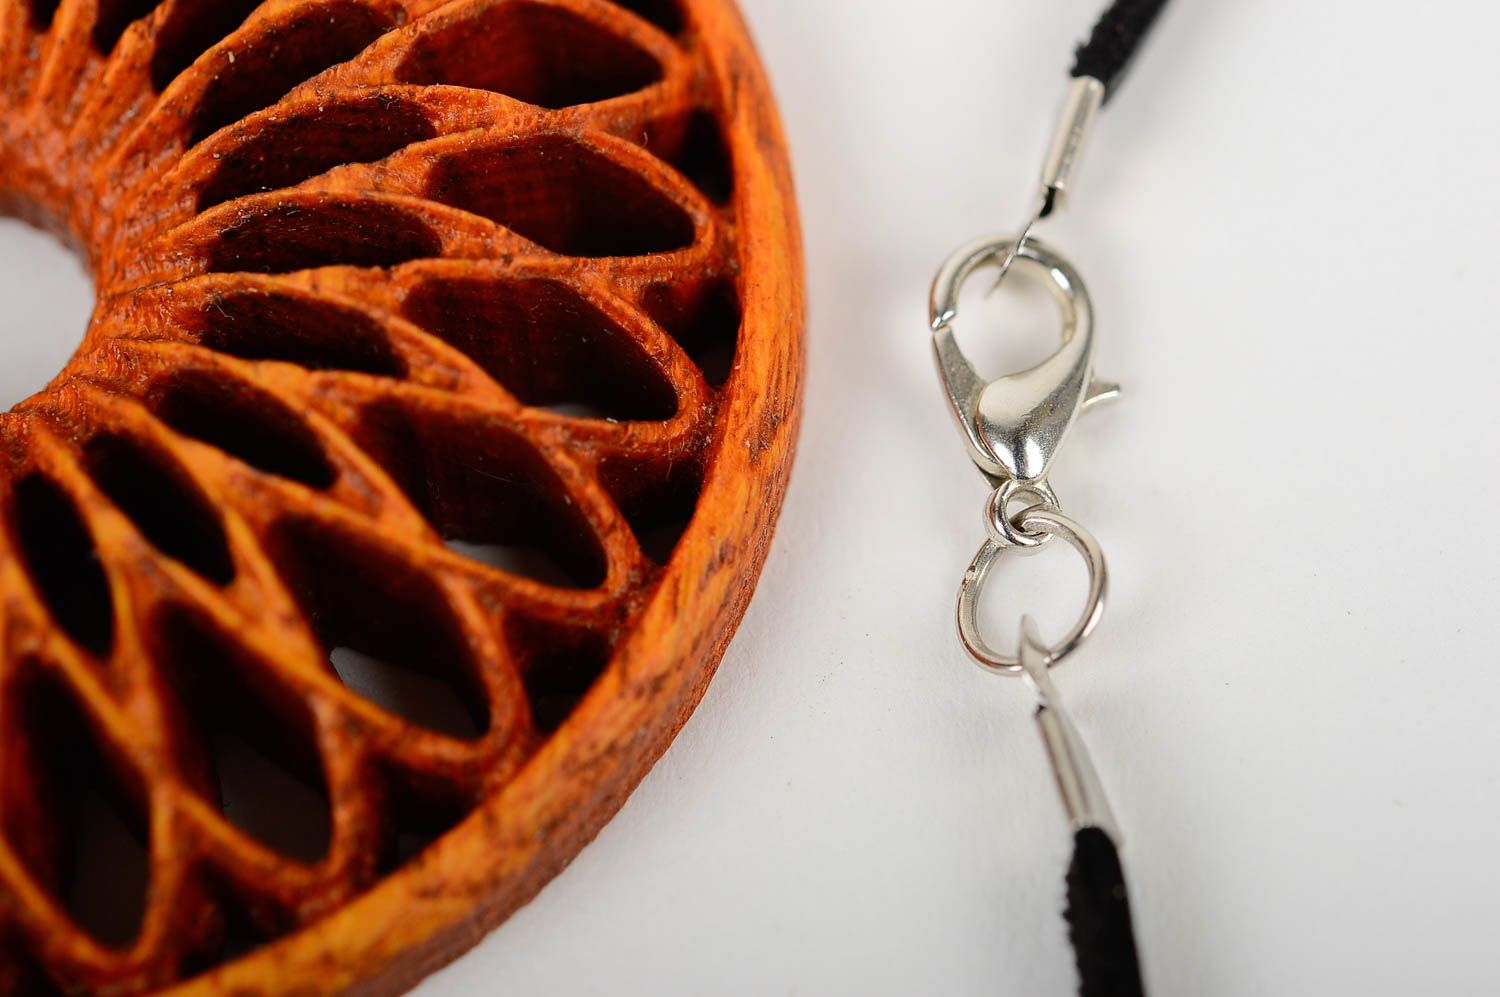 Handmade pendant unusual accessory wooden jewelry gift ideas pendant for men photo 5